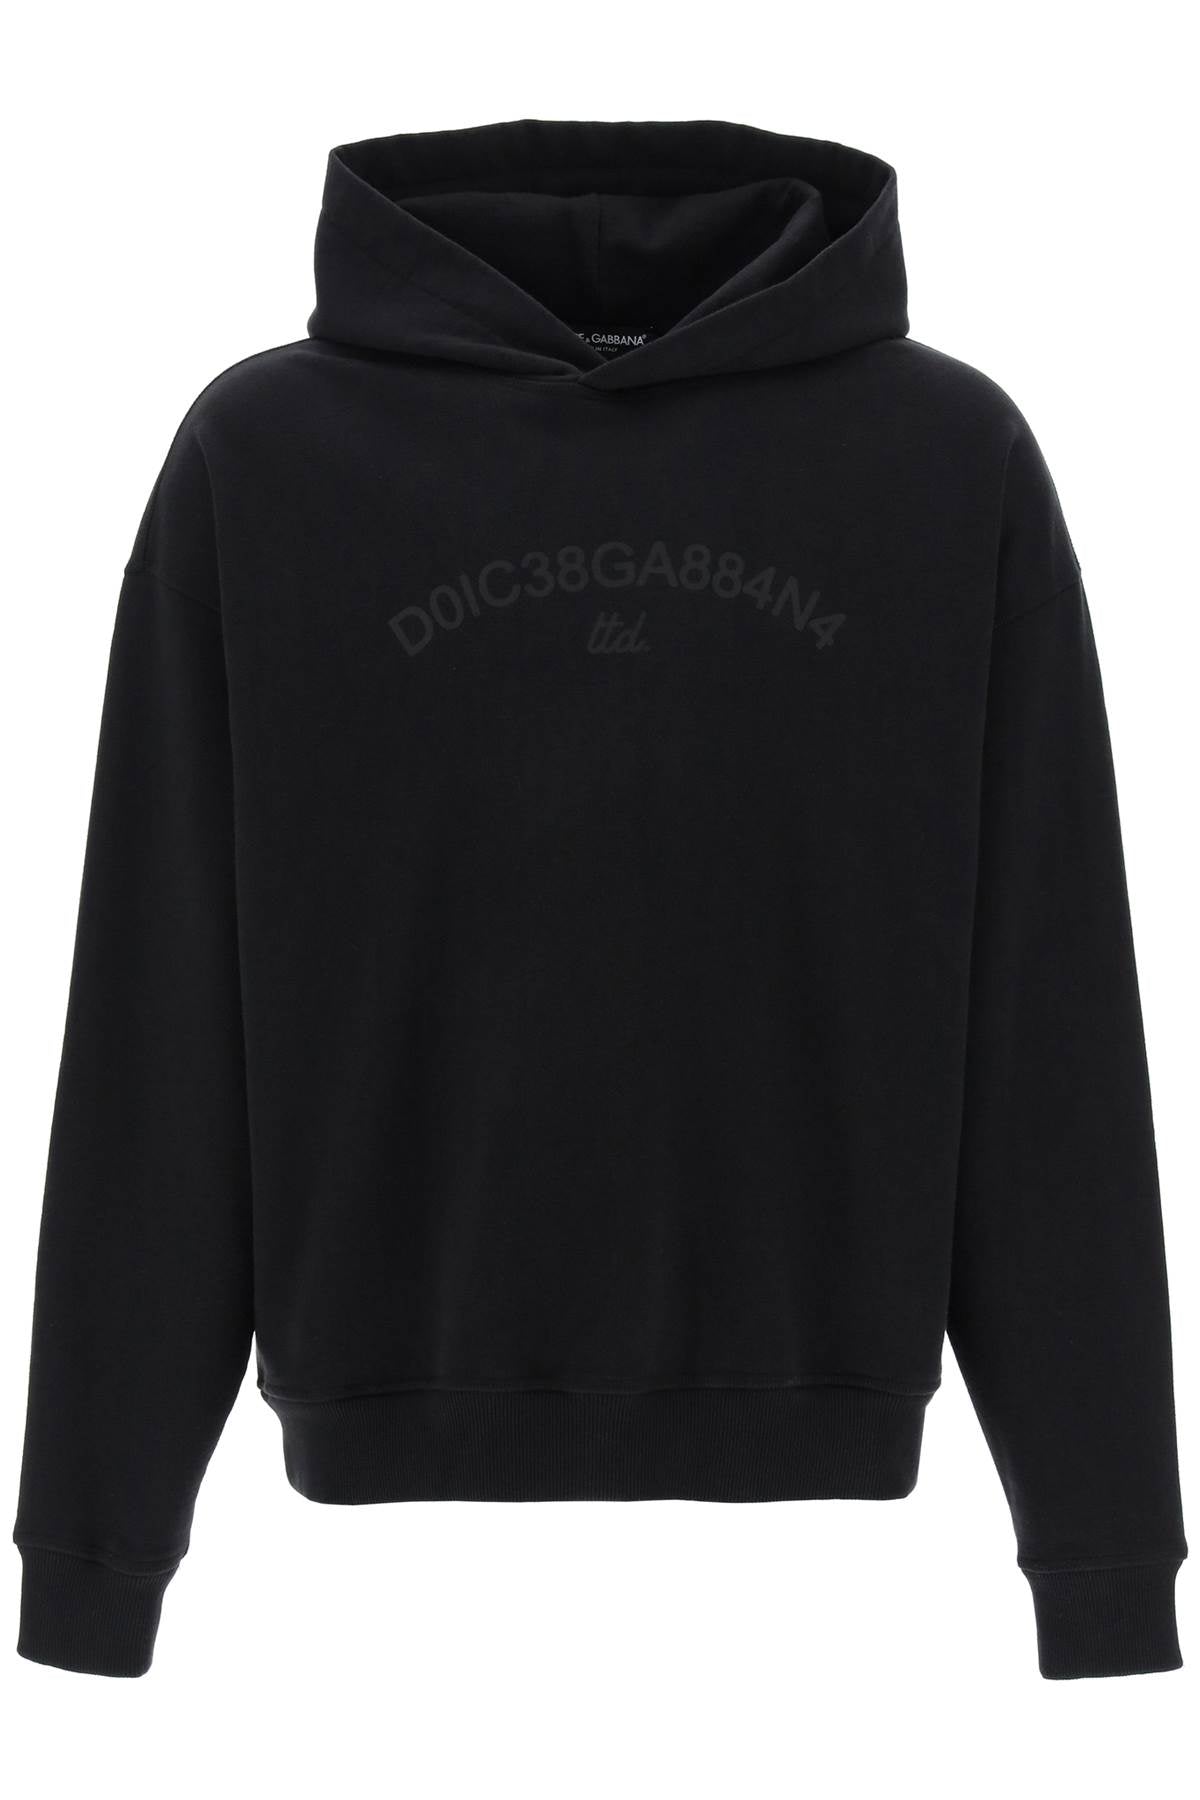 Dolce & gabbana hooded sweatshirt with logo print-0